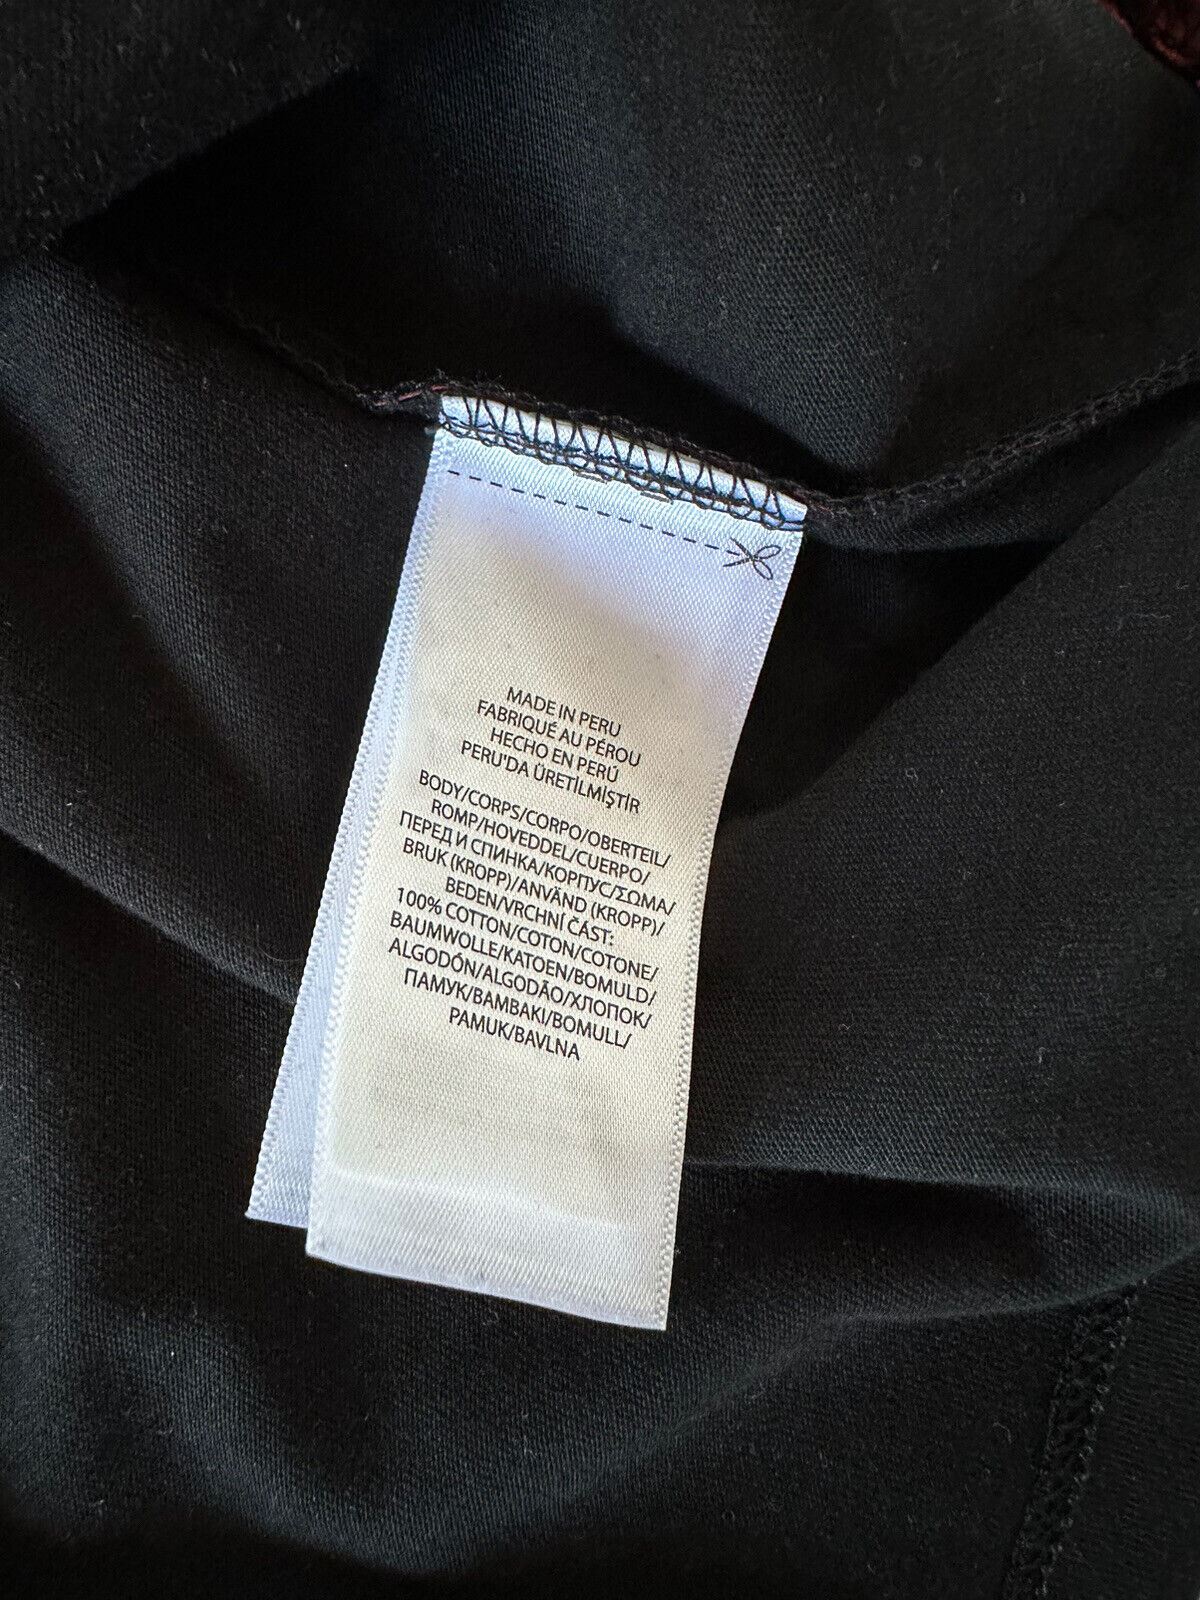 Neu mit Etikett: 65 $ Polo Ralph Lauren Kurzarm-Logo-T-Shirt Schwarz M 